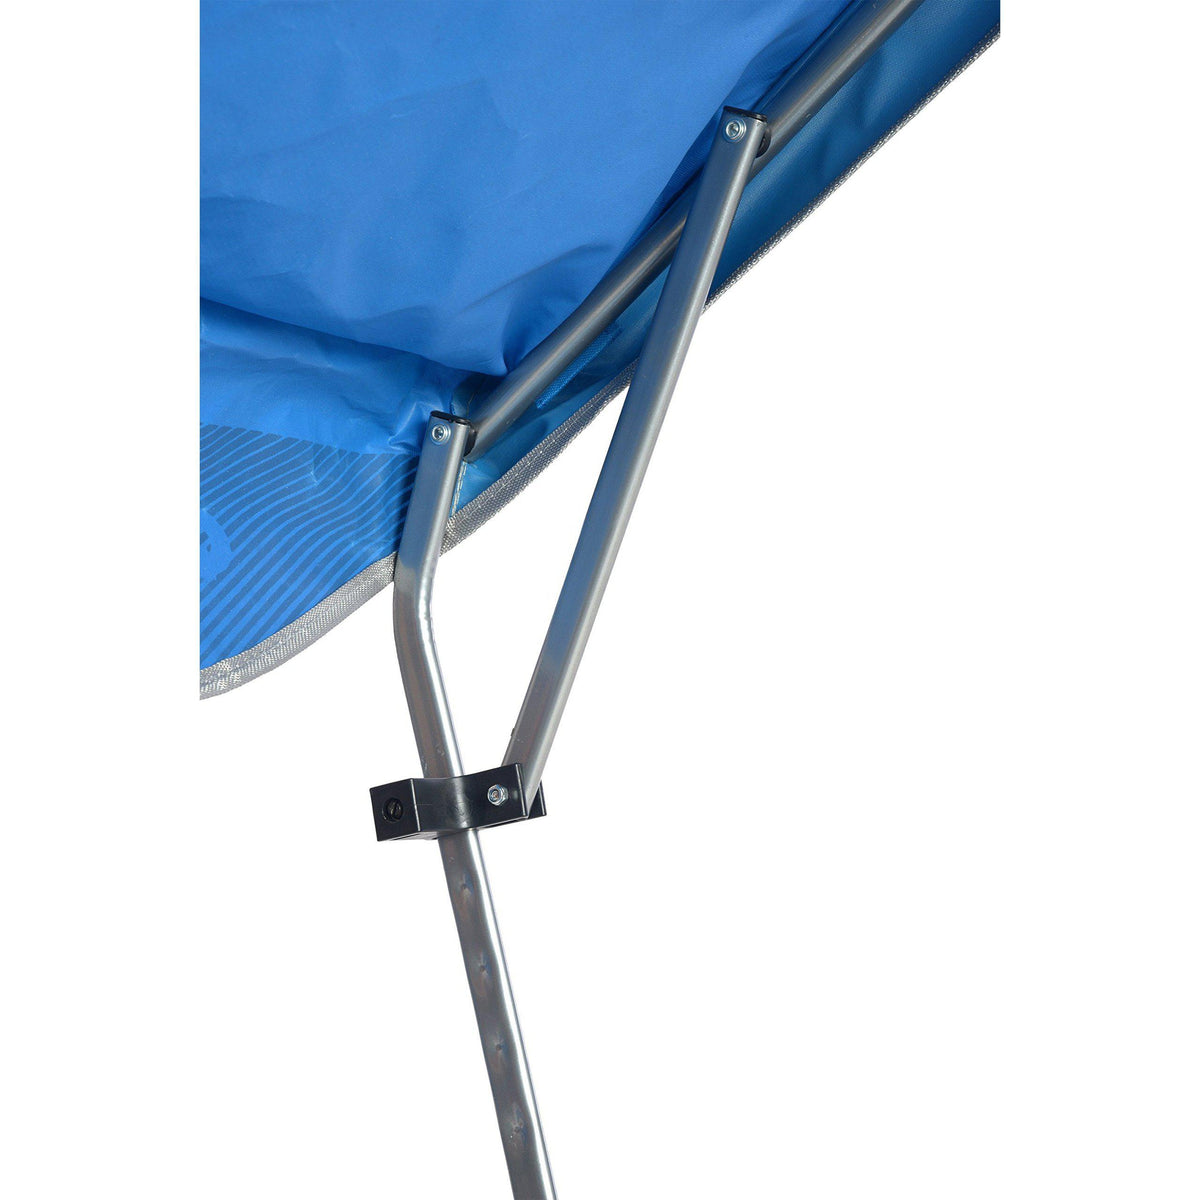 Quik Shade Full Size Shade Folding Chair, Royal Blue